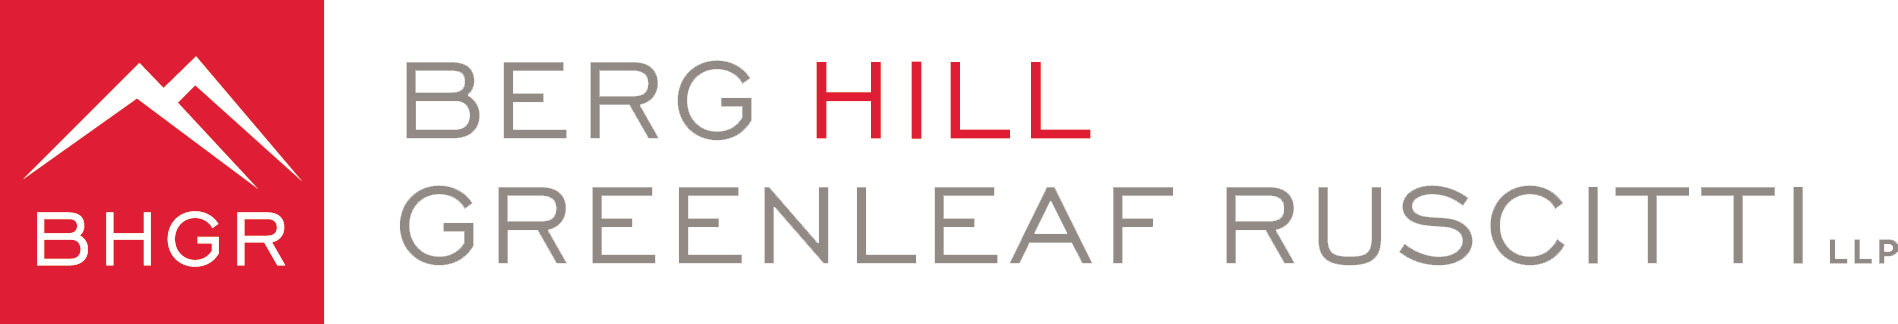 Logo for Berg Hill Greenleaf Ruscitti, LLP